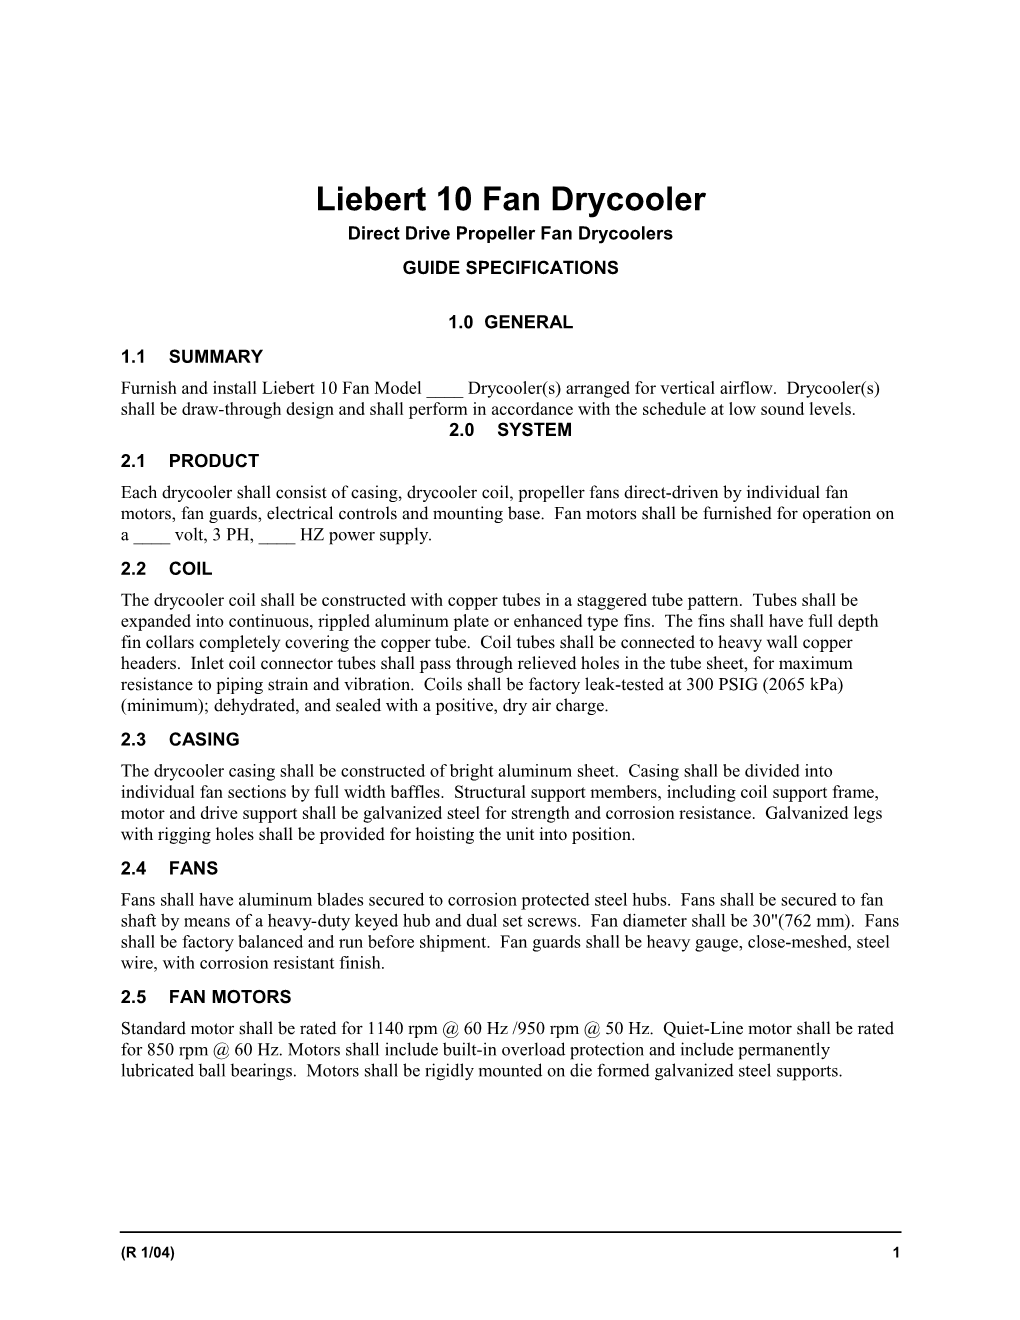 Liebert 10-Fan Drycooler Guide Specification